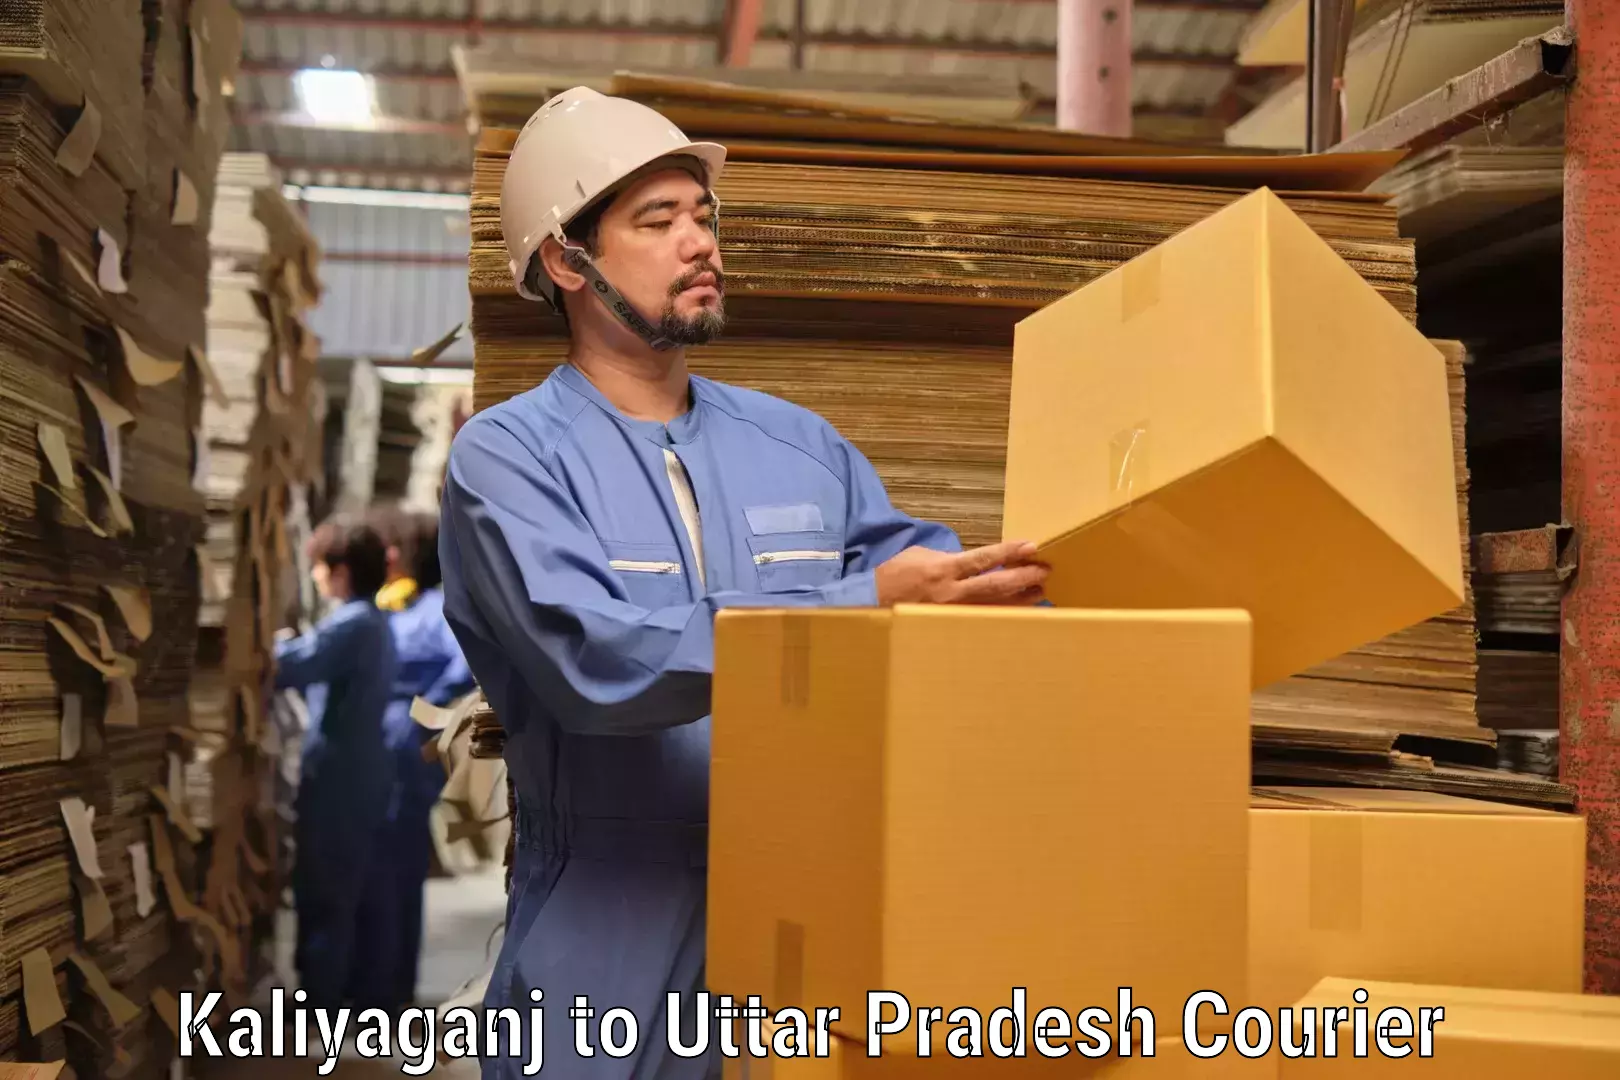 Reliable delivery network Kaliyaganj to Kushinagar